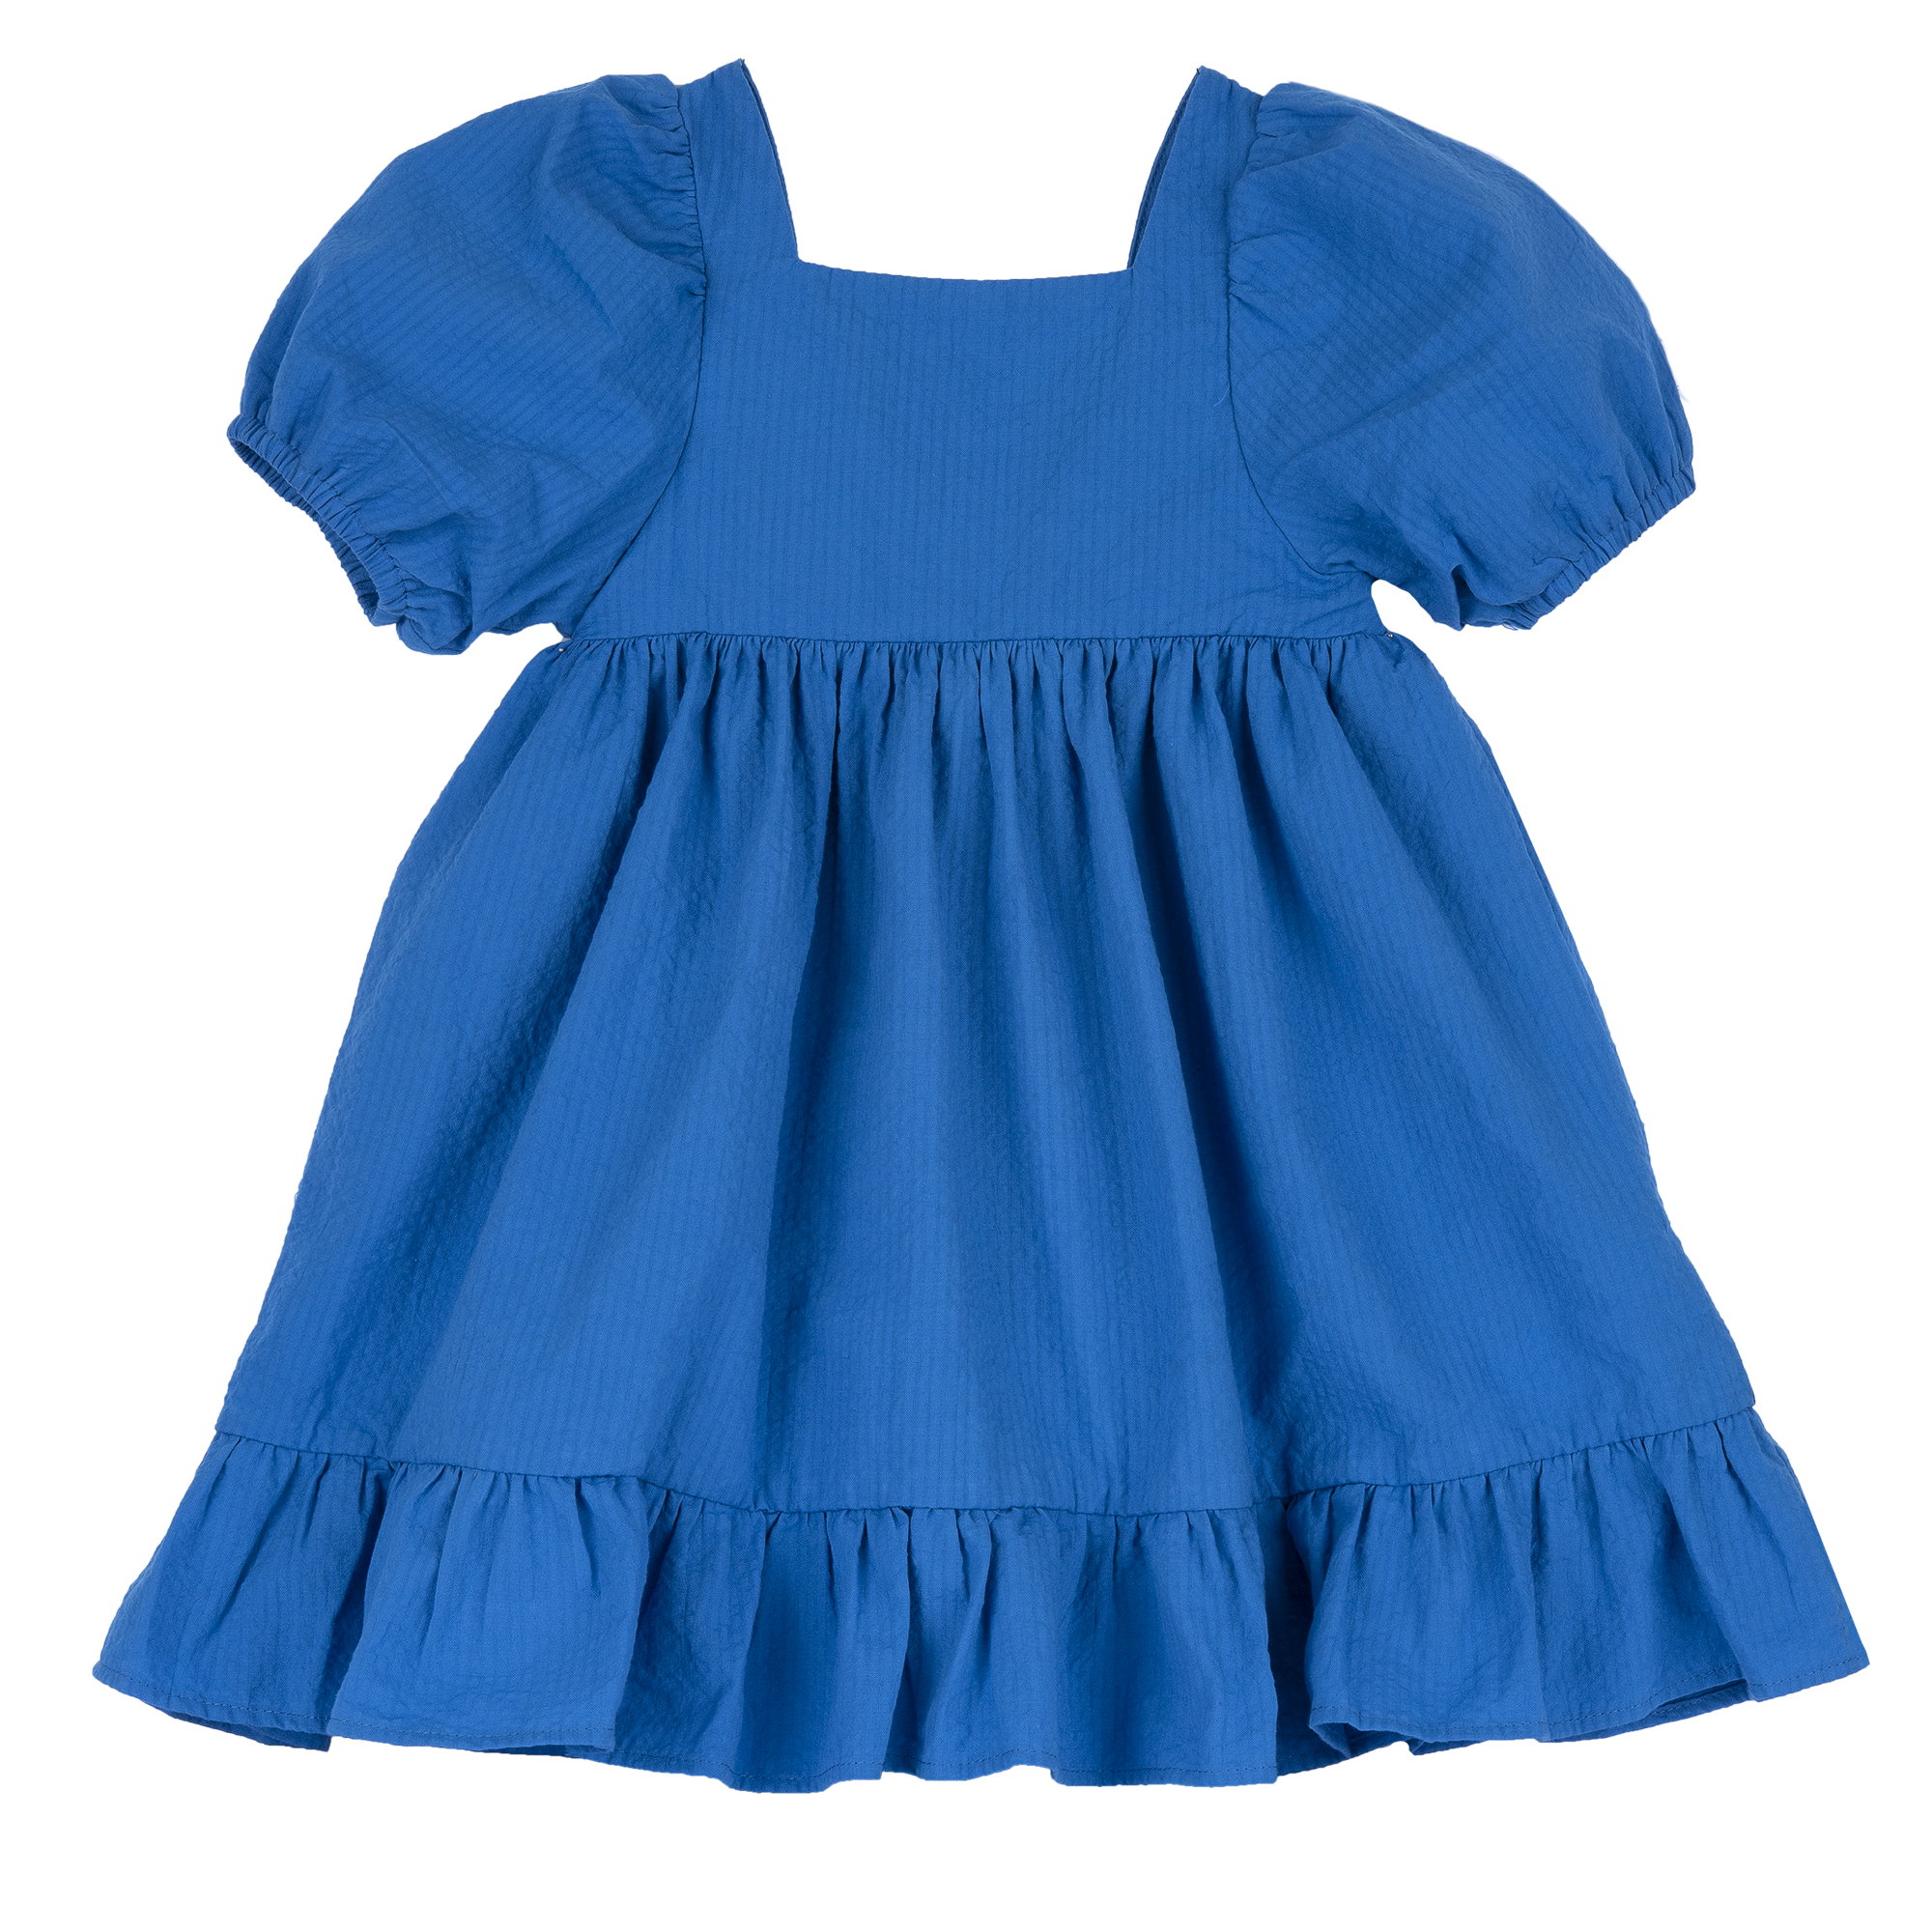 Rochie Copii Chicco, Bleu 2, 05483-66mc